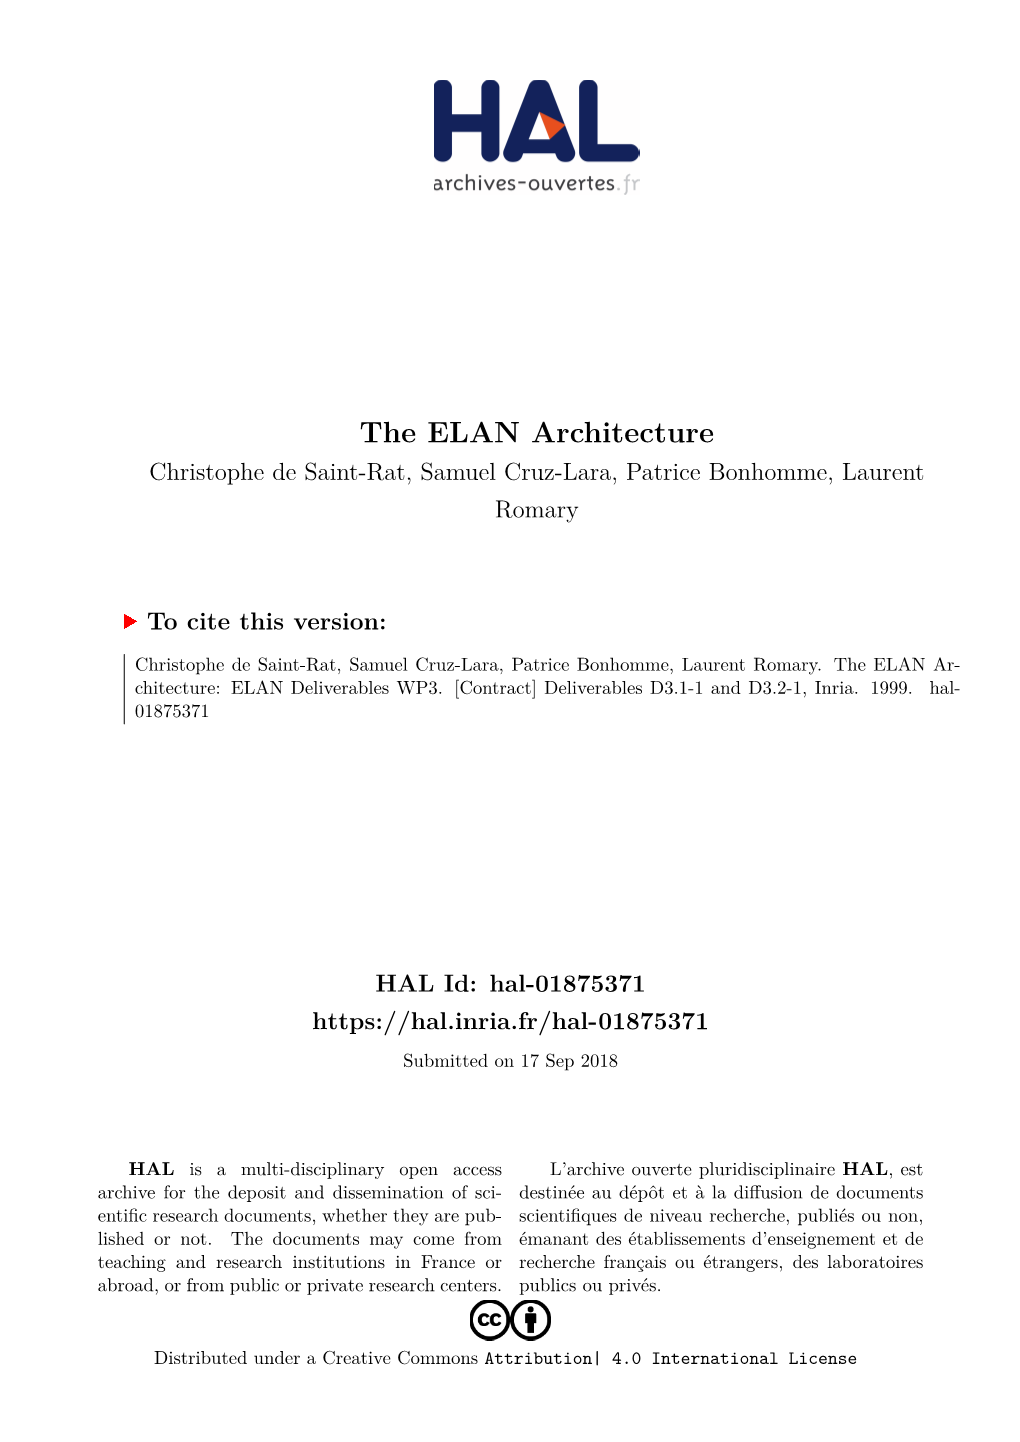 The ELAN Architecture Christophe De Saint-Rat, Samuel Cruz-Lara, Patrice Bonhomme, Laurent Romary